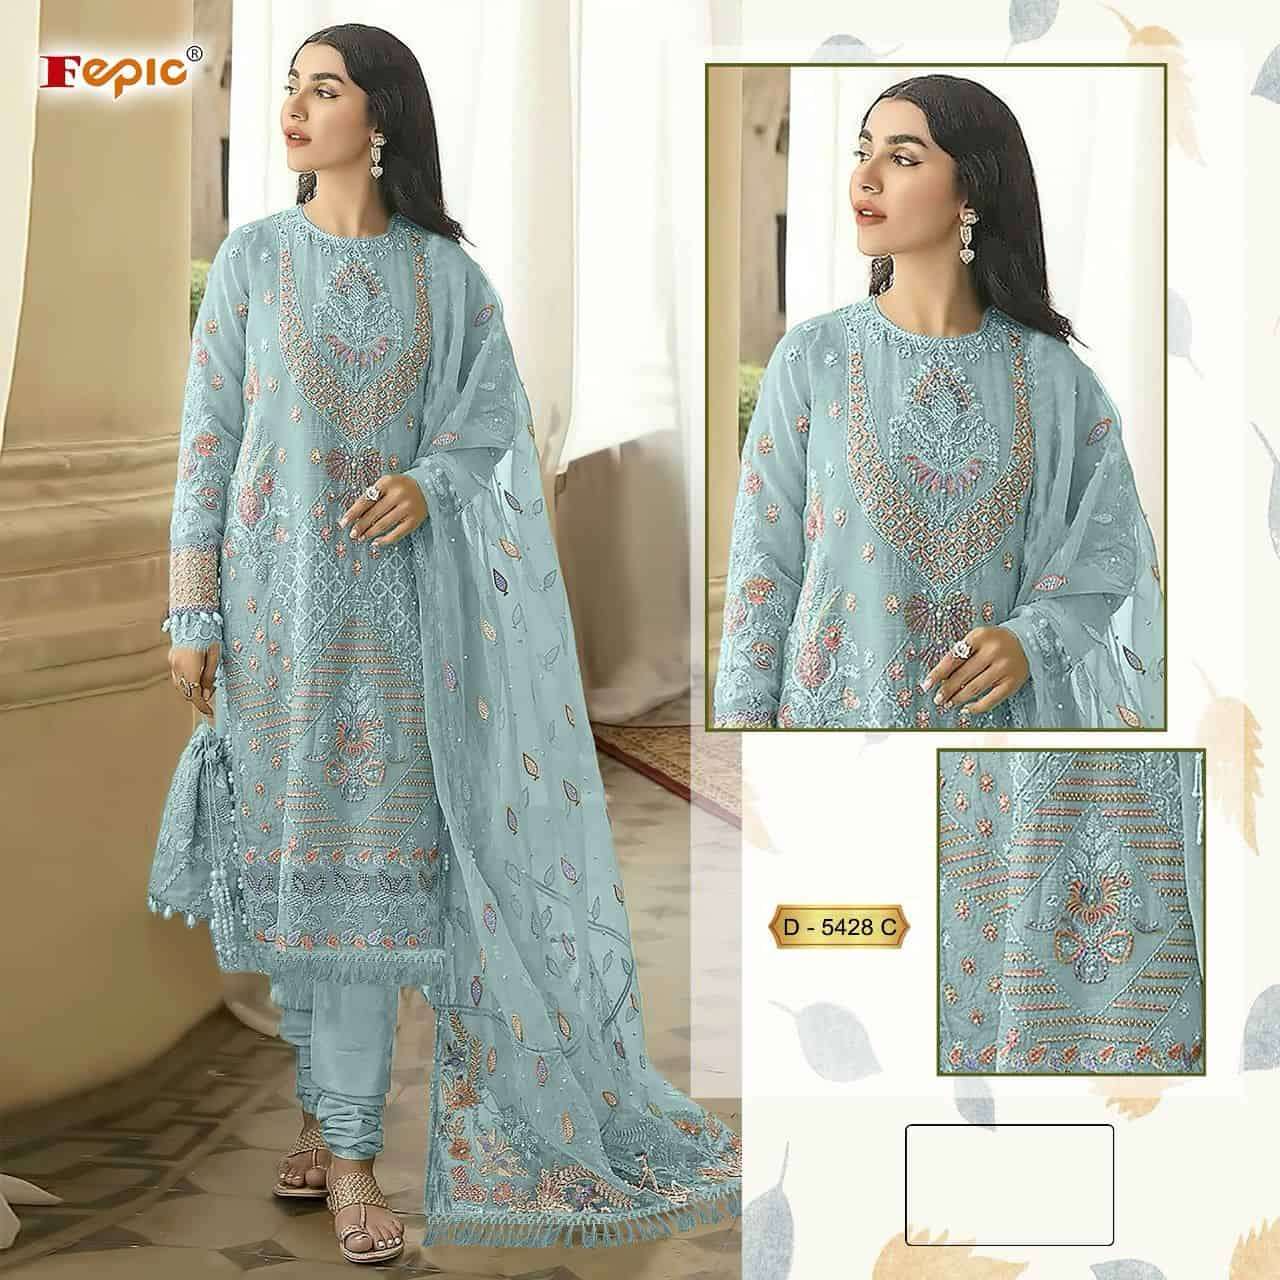 Fepic C 5428 C Exclusive Latest Designer Style Pakistani Suit Collection